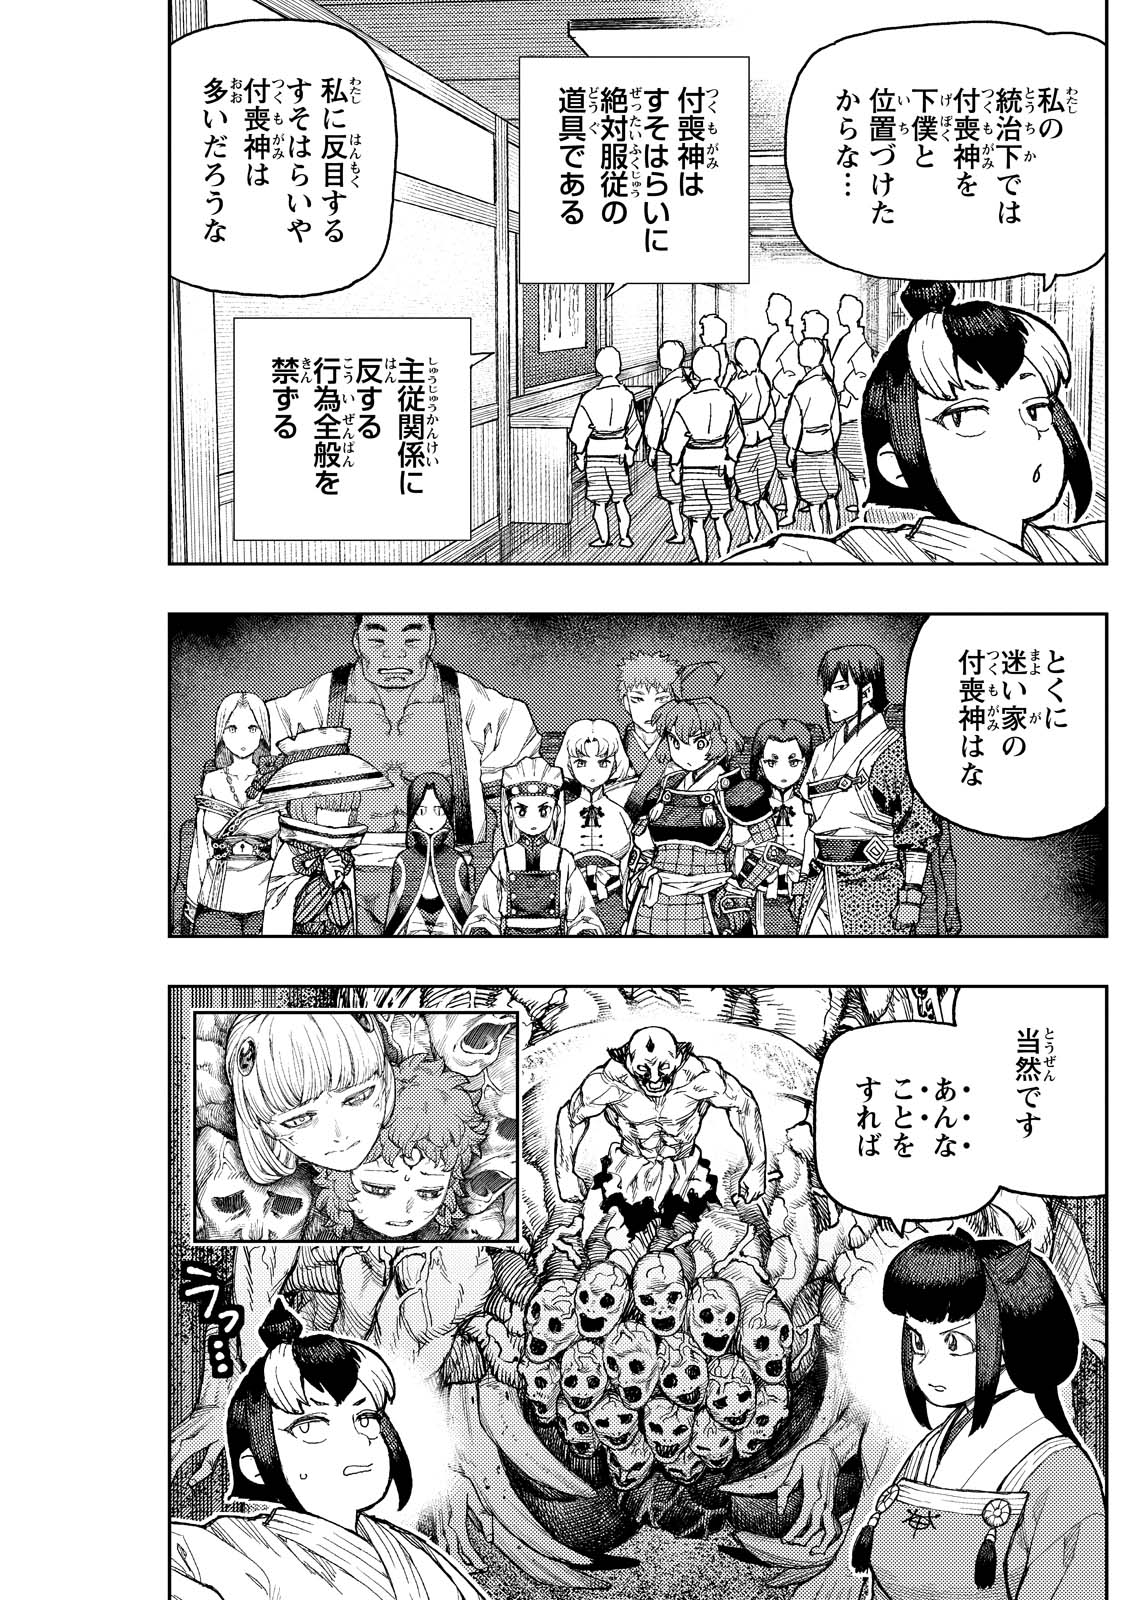 Tsugumomo - Chapter 169 - Page 3